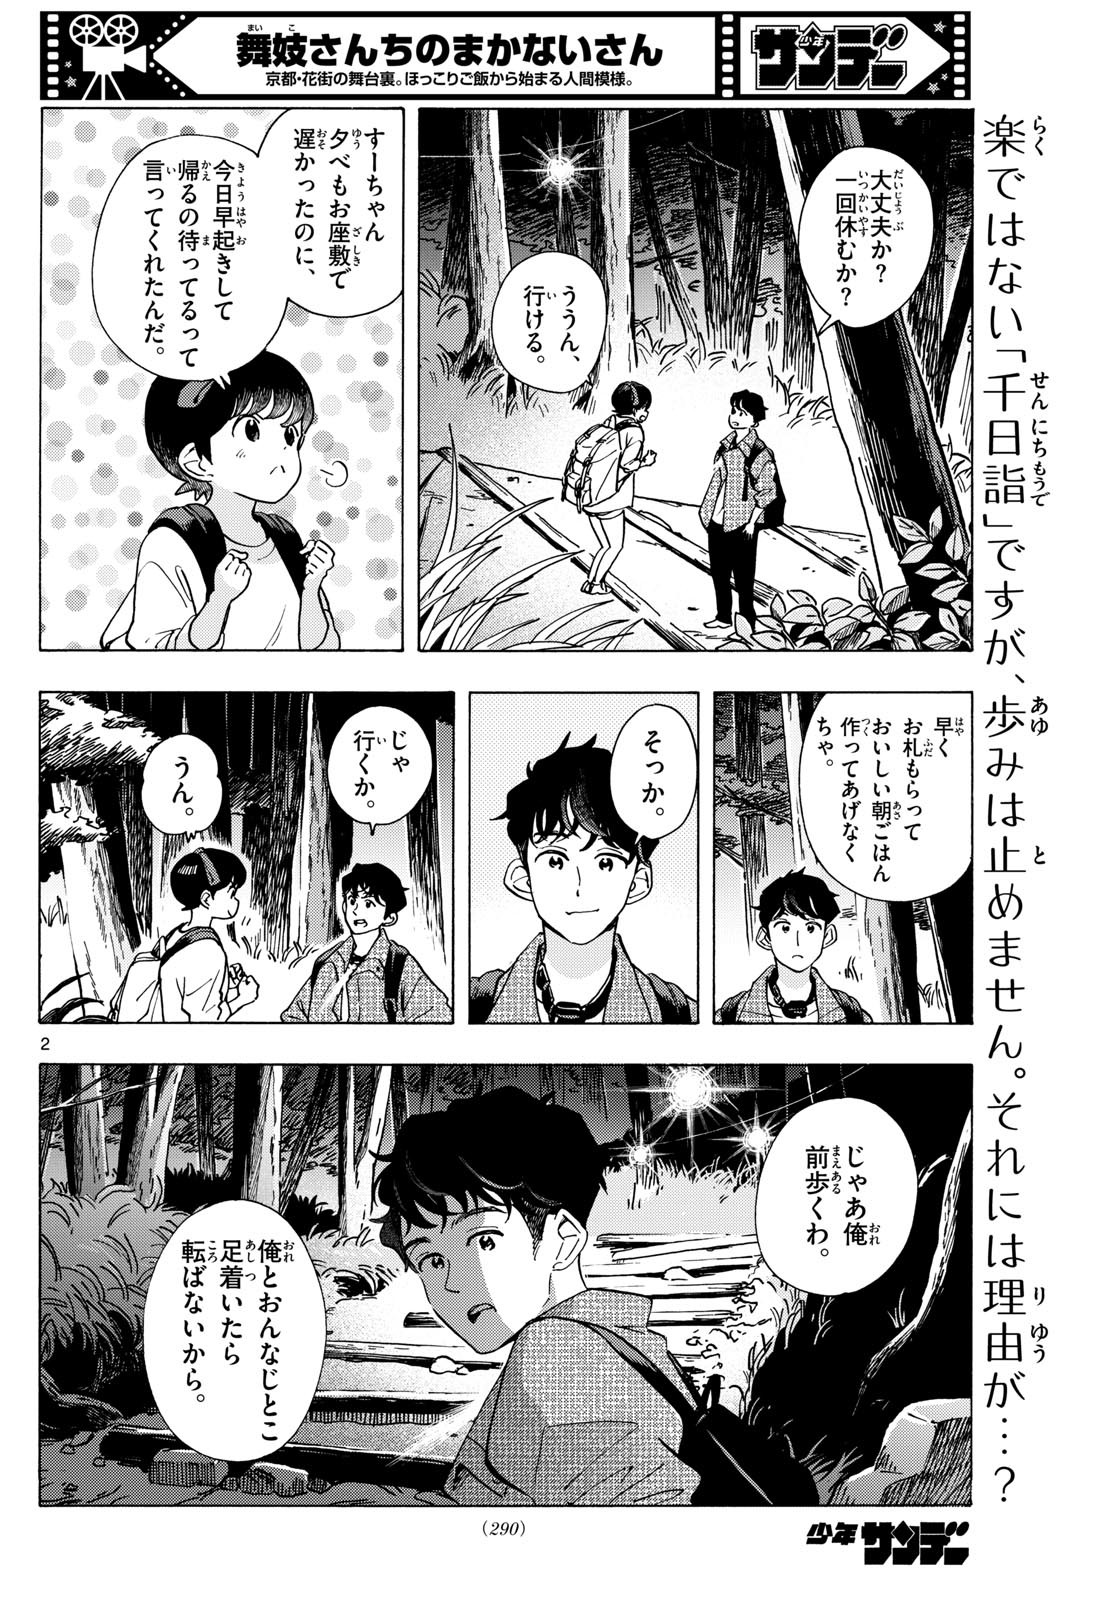 Maiko-san Chi no Makanai-san - Chapter 297 - Page 2